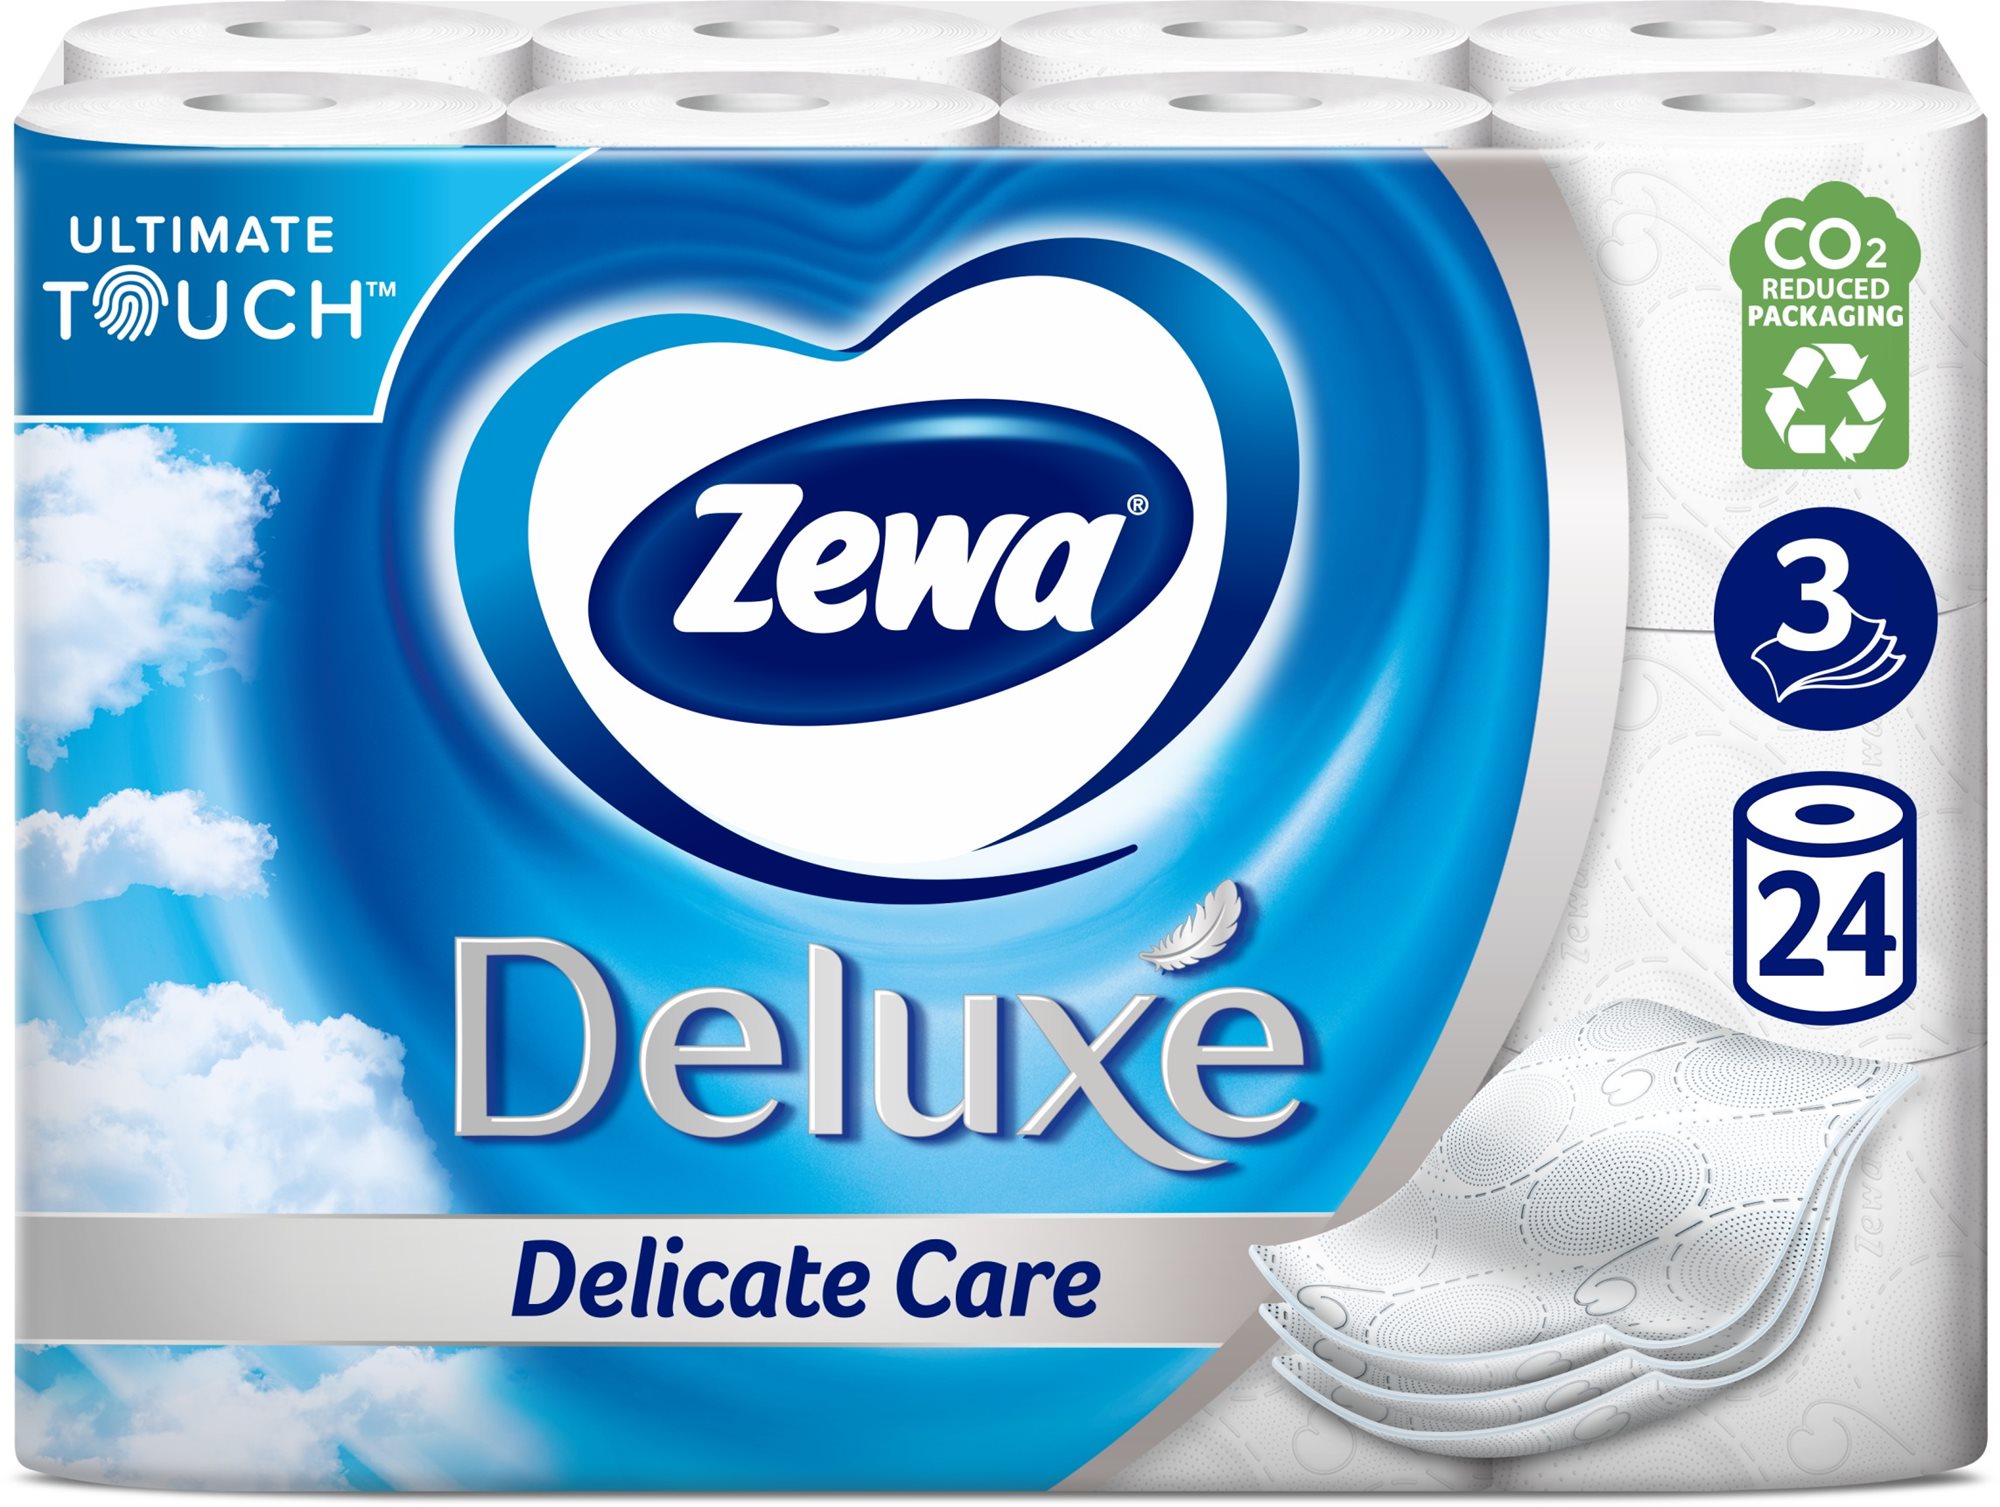 ZEWA Deluxe Delicate Care (24 tekercs)